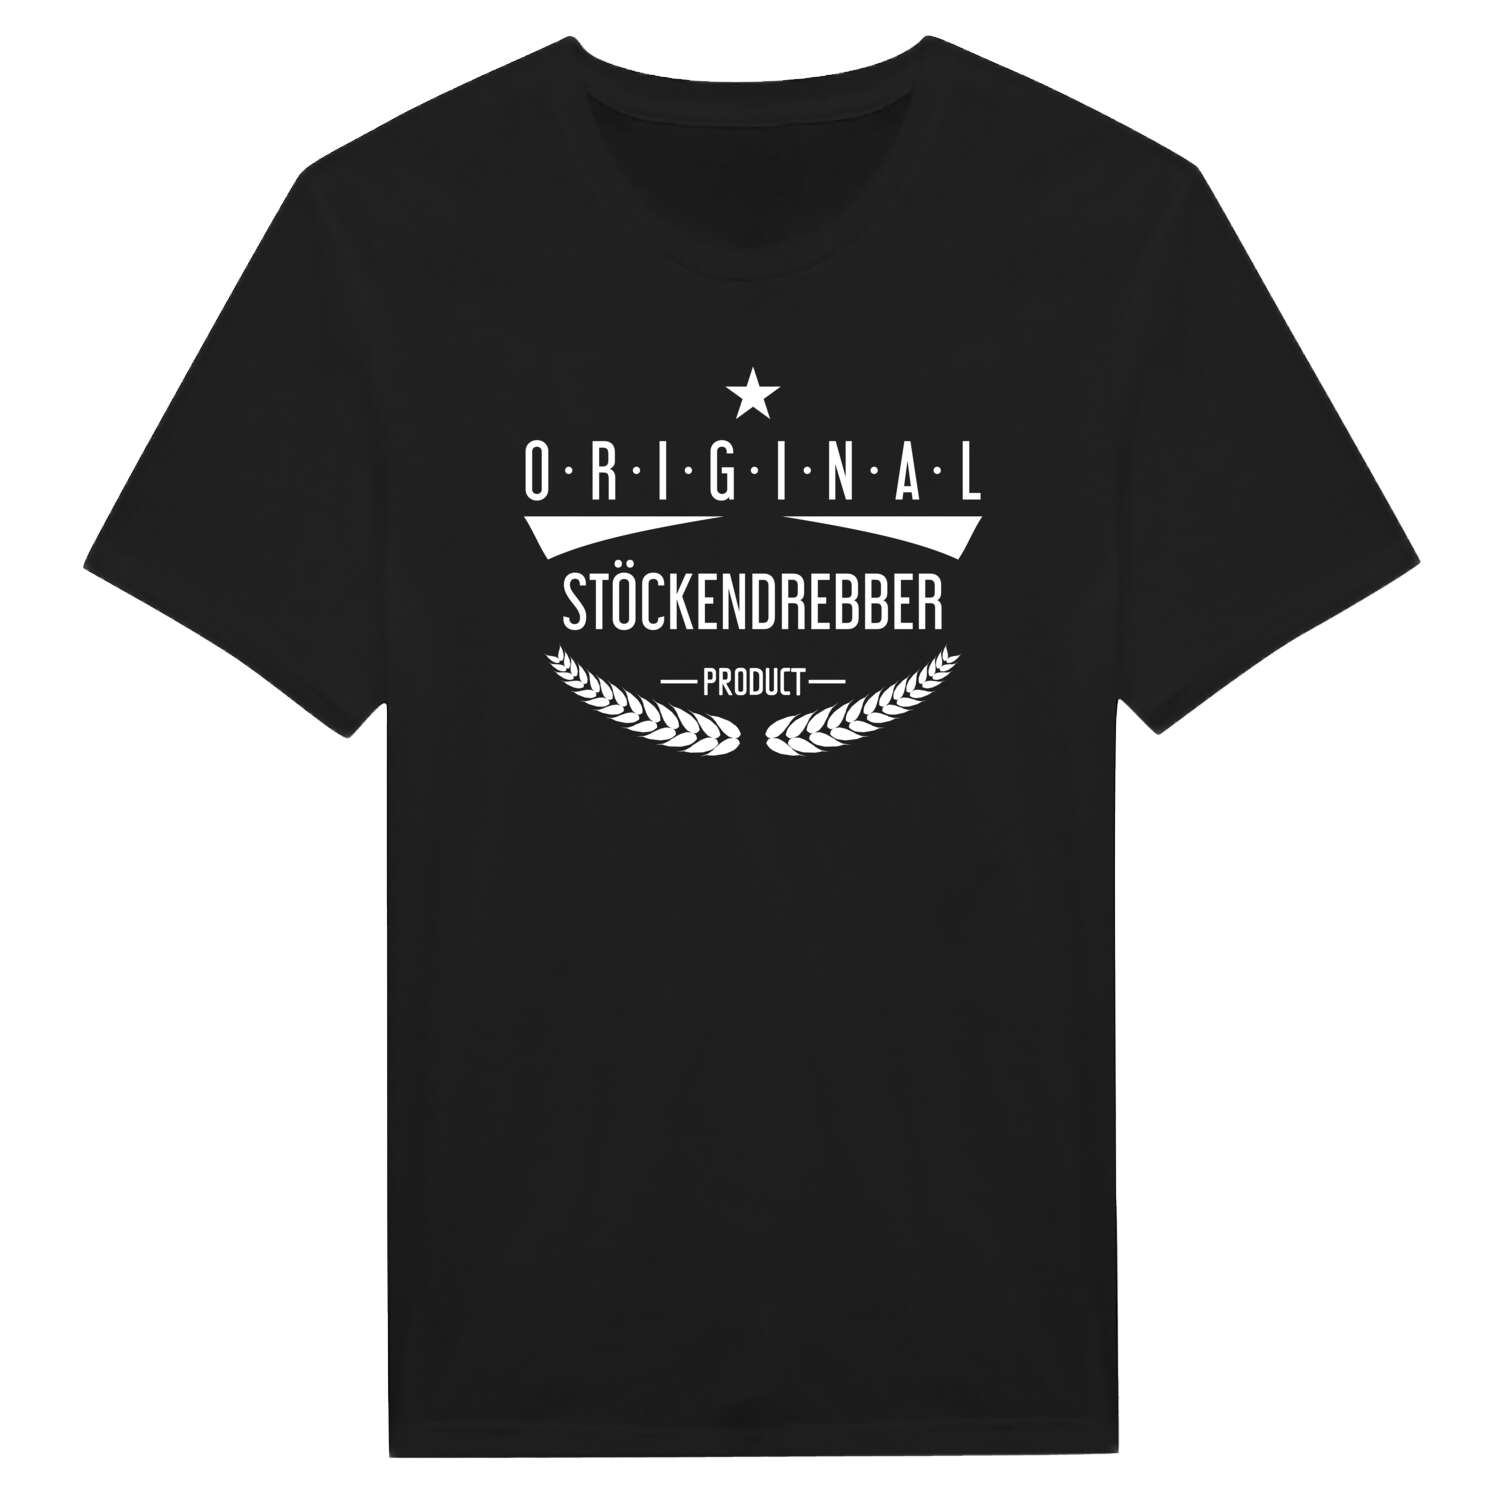 Stöckendrebber T-Shirt »Original Product«